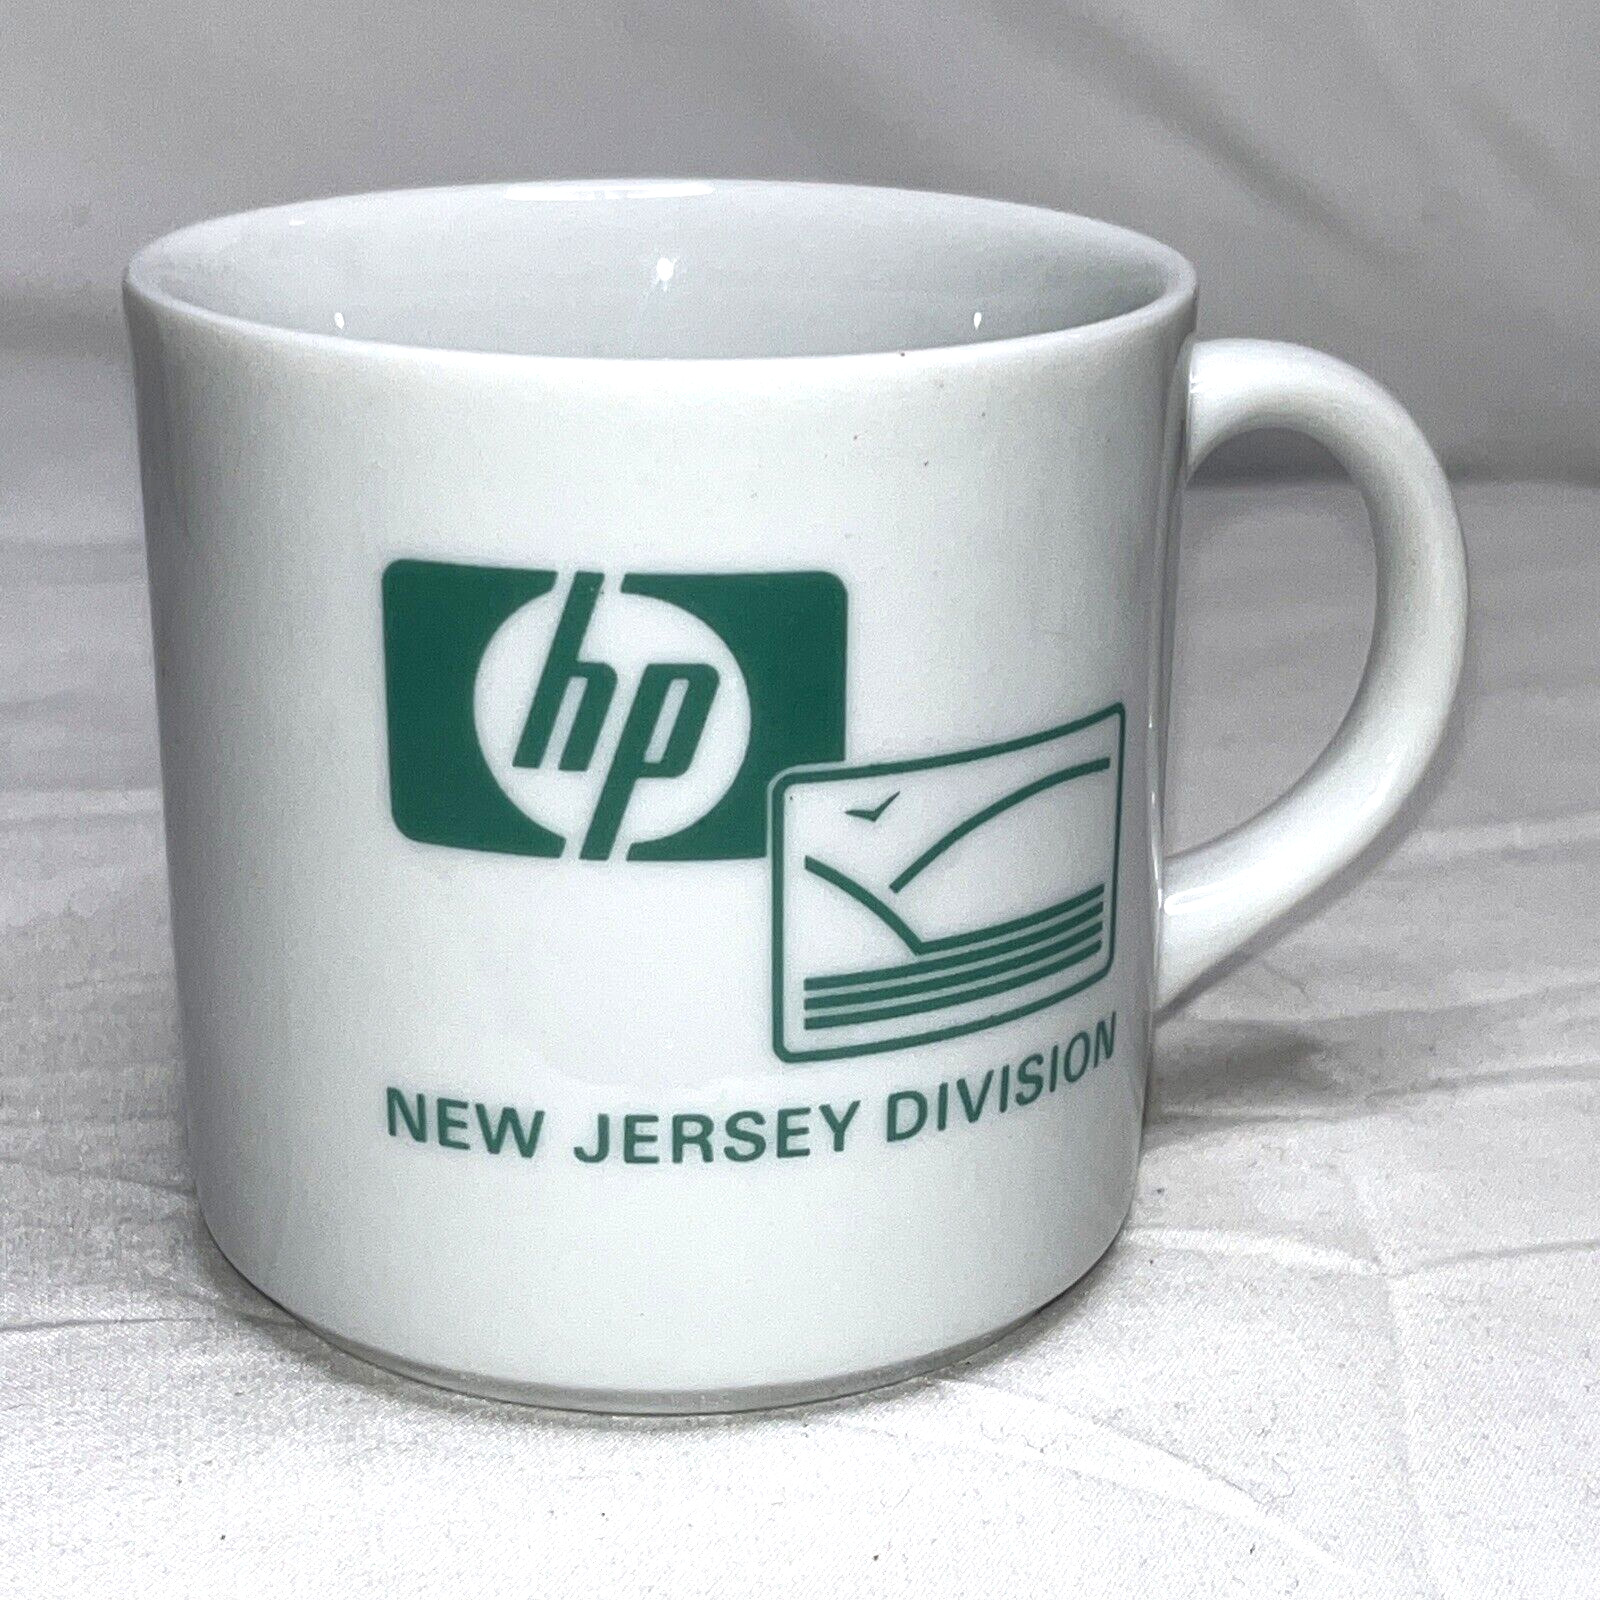 HP Coffee Mug Hewlett Packard New Jersey Division Ceramic 12 Oz